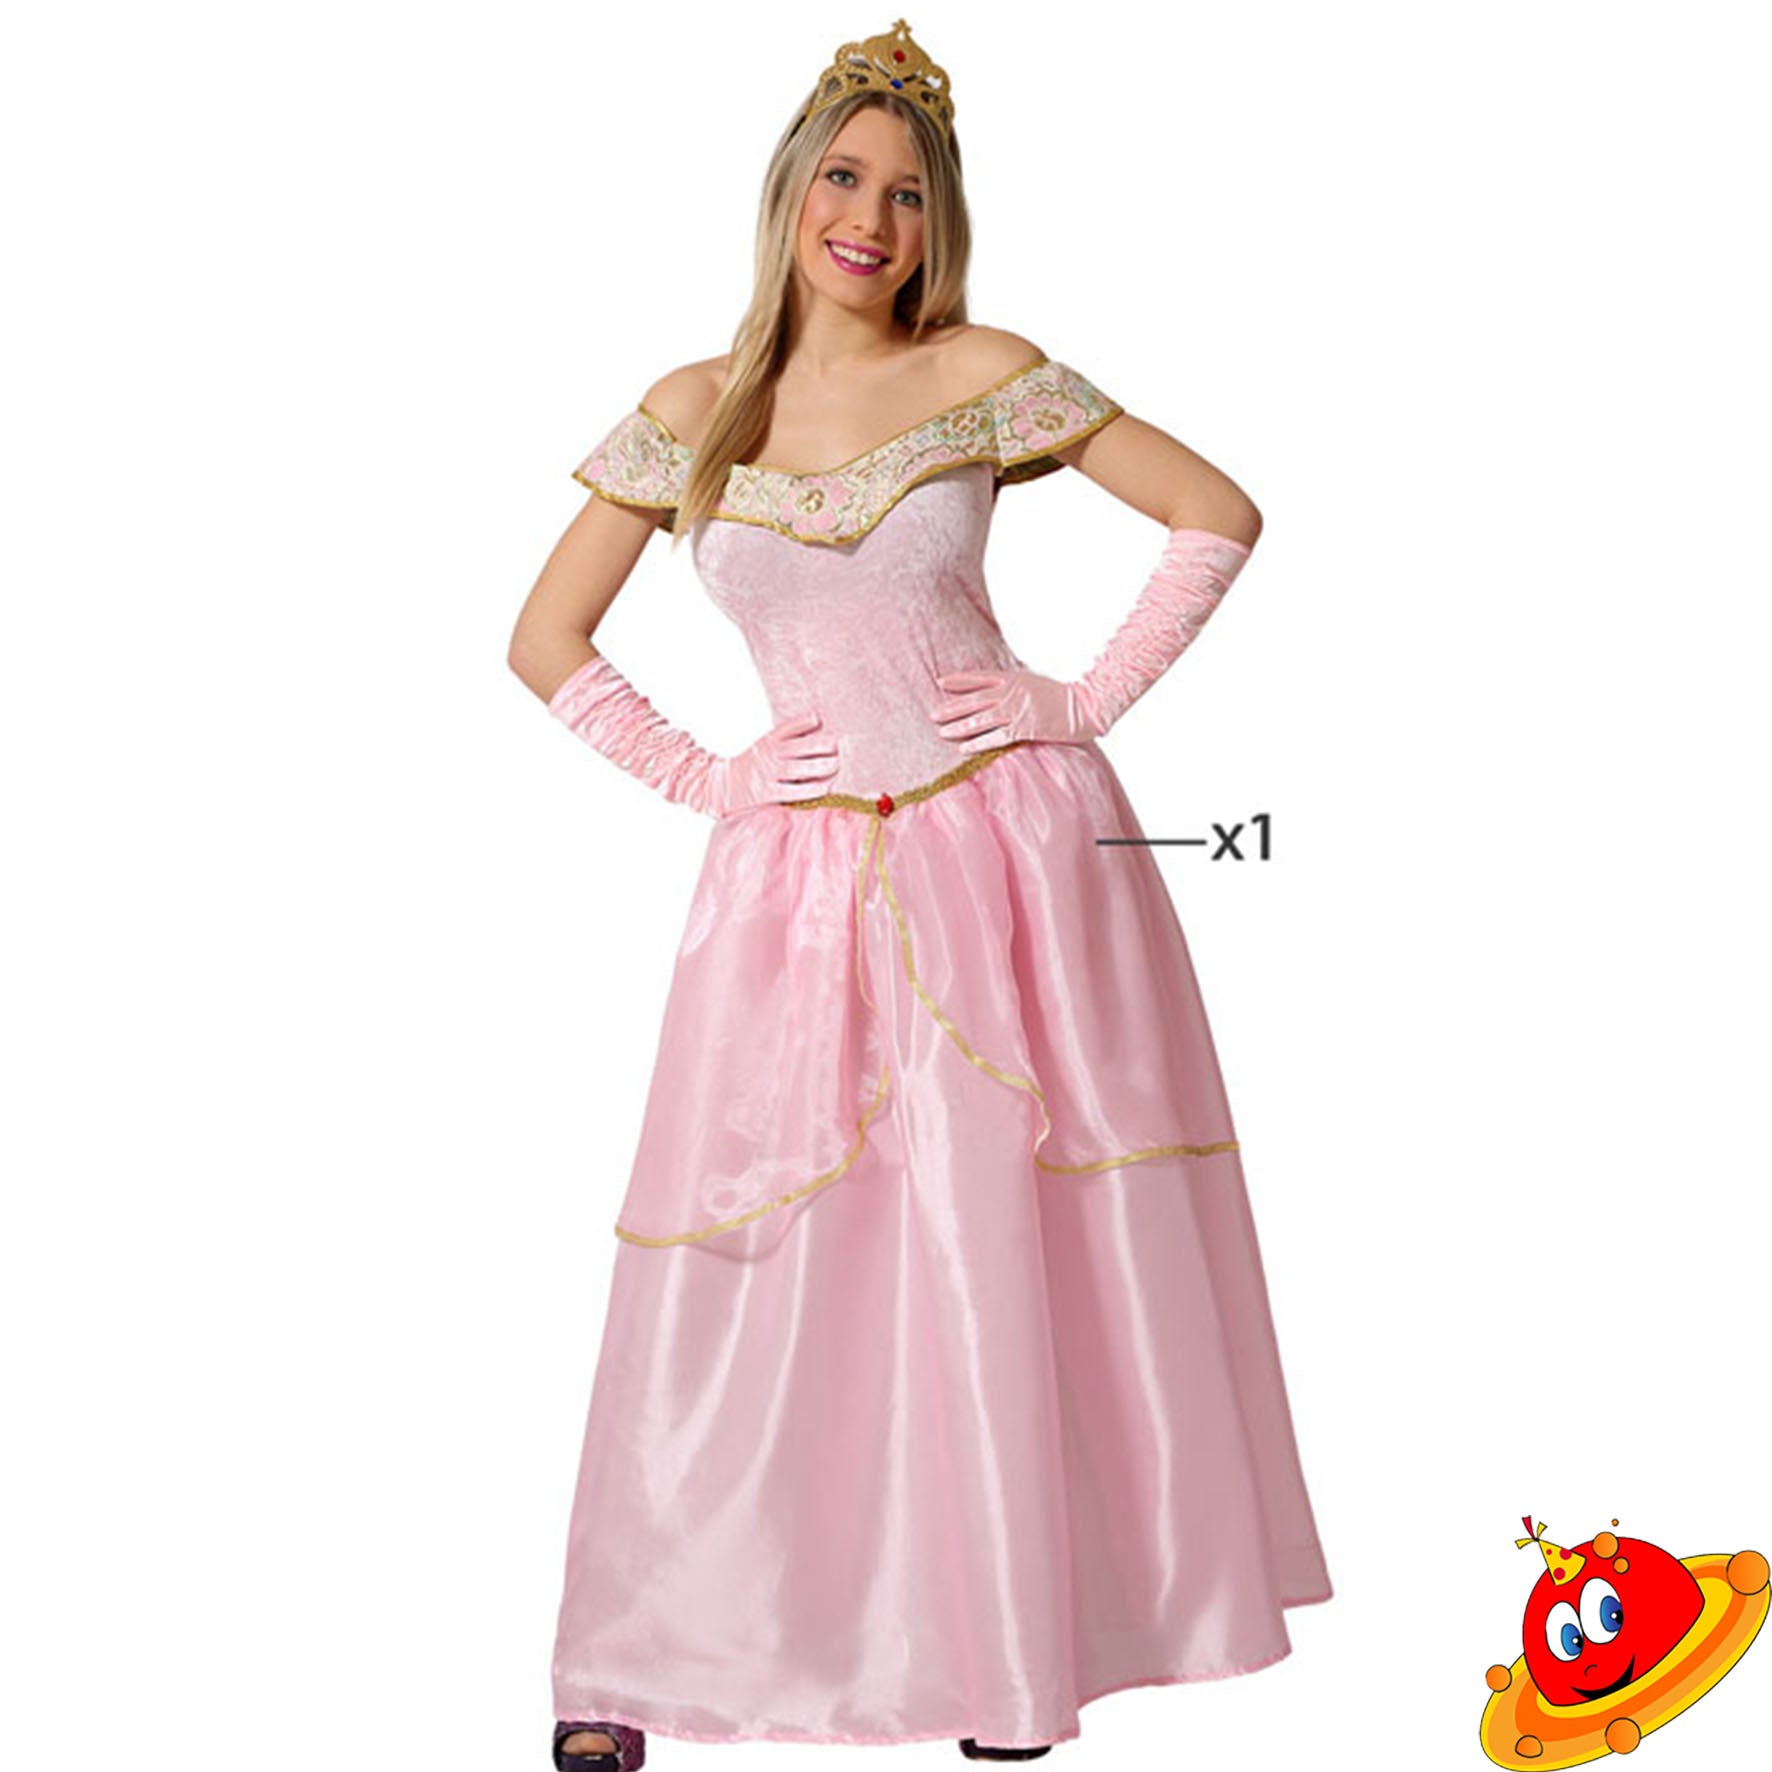 Costume Donna Principessa Cenerentola Rosa Tg 36/46 – Universo In Festa